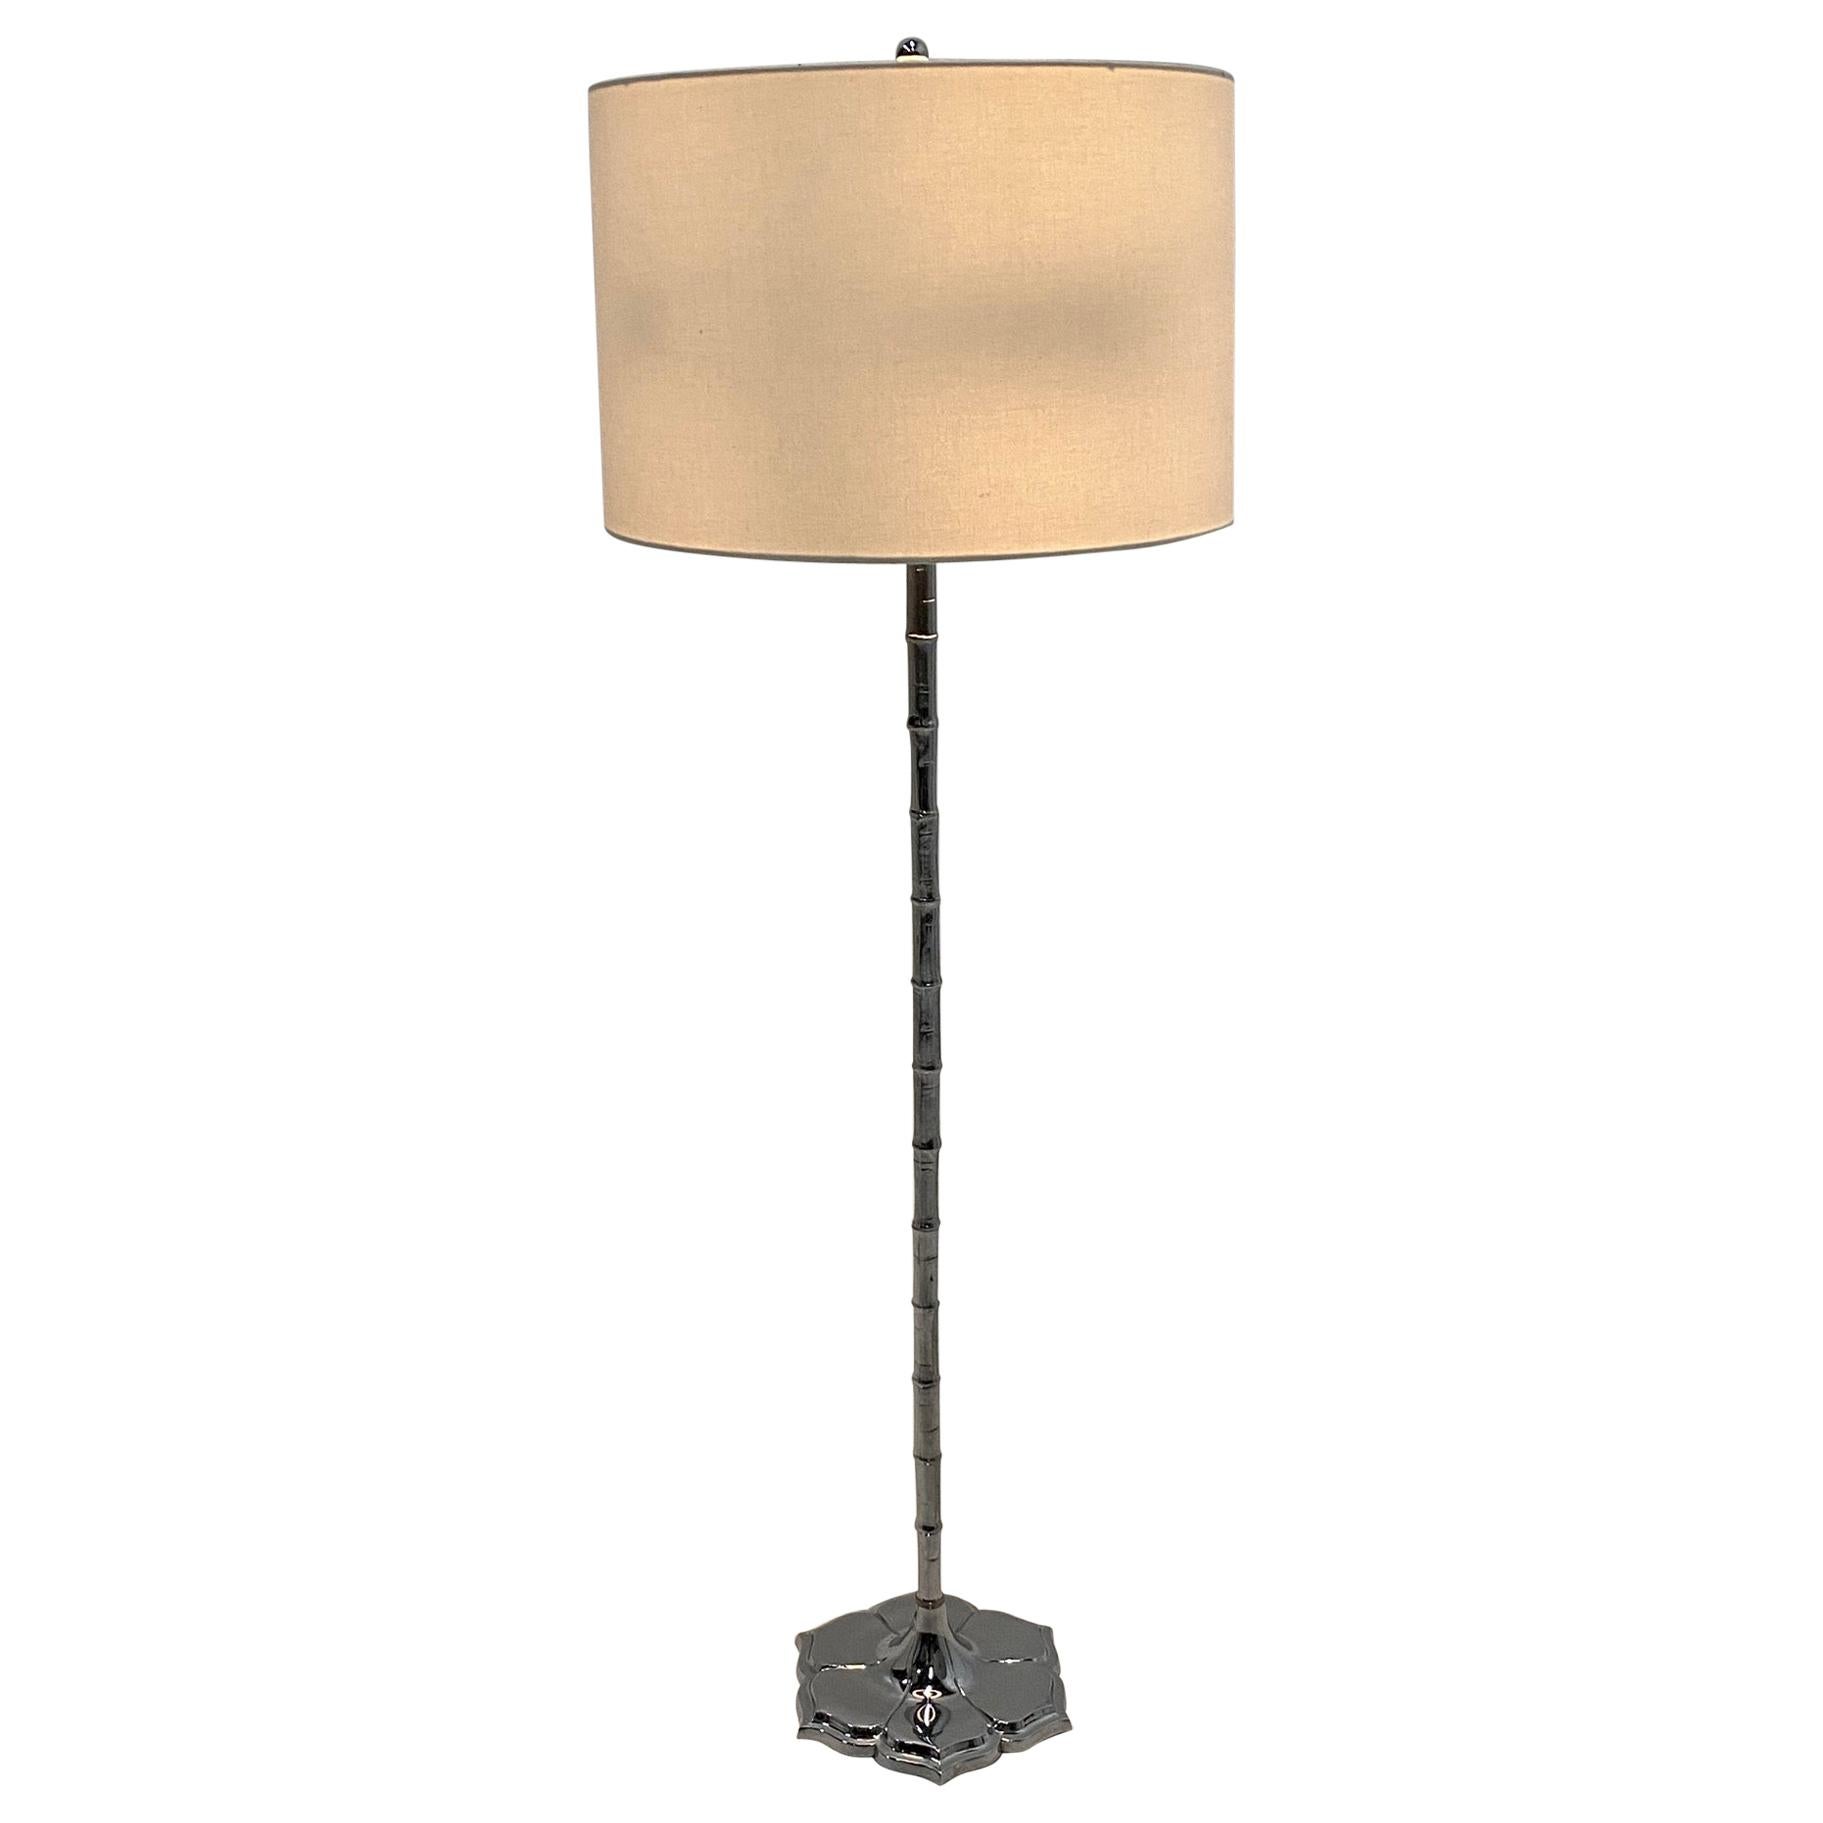 Chic Mid-Century Modern Chrome Faux Bamboo Floor Lamp